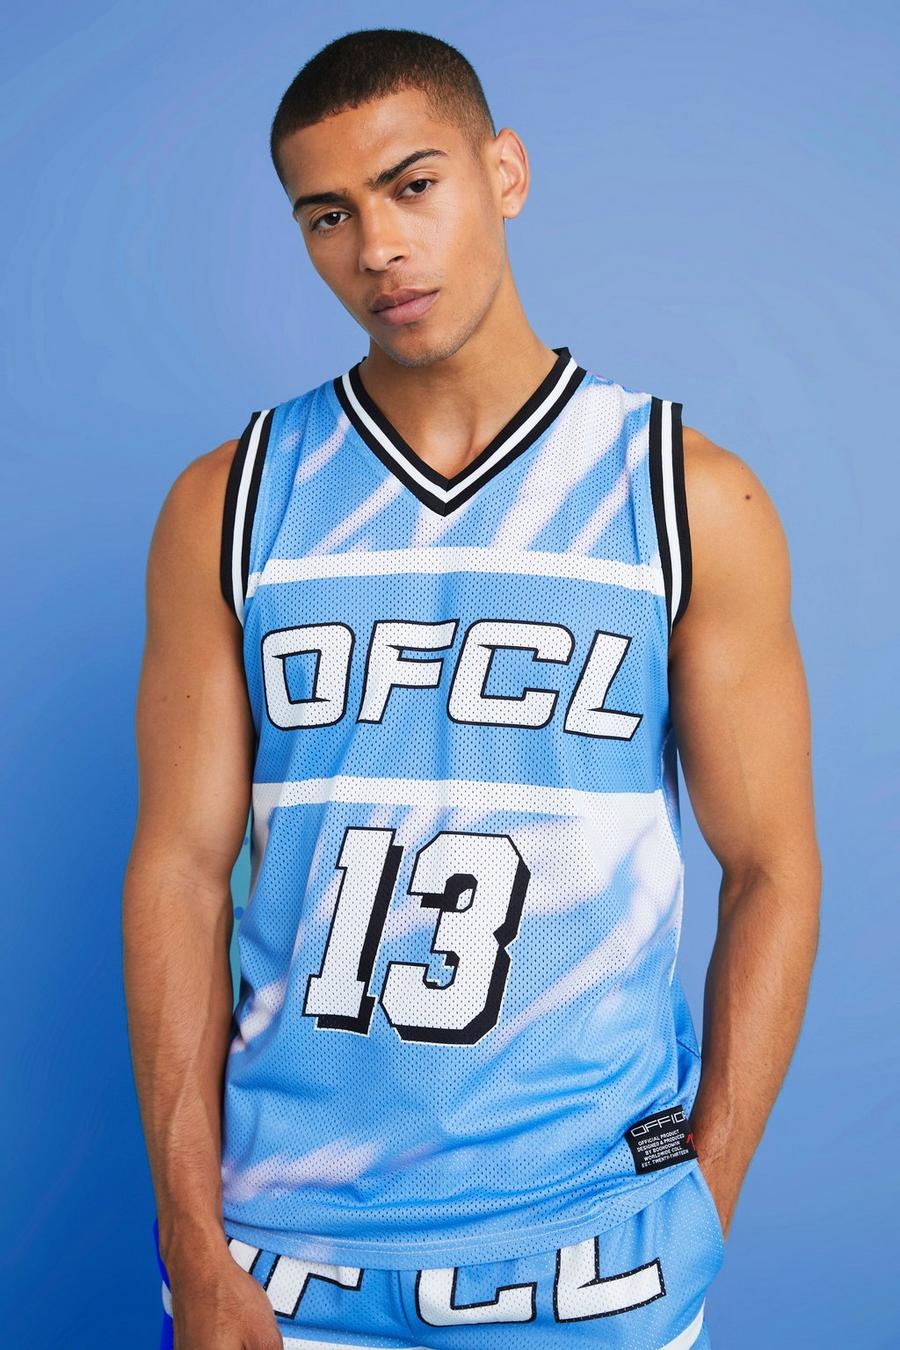 Ofcl Palm Print Mesh Basketball Vest, Light blue azzurro